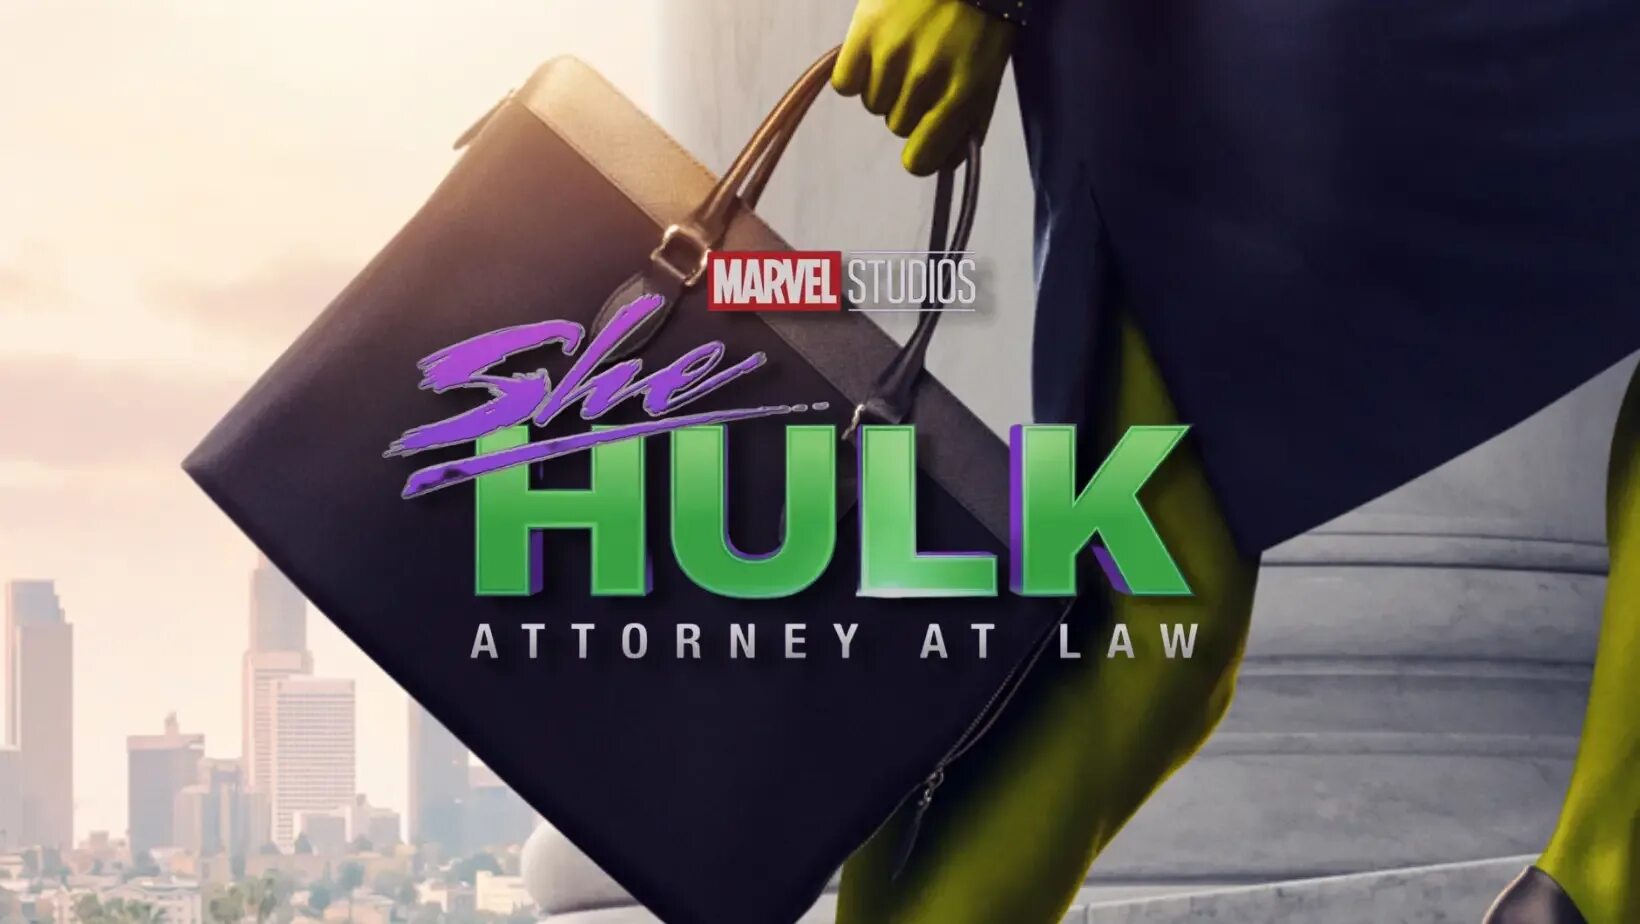 She hulk attorney at law. She-Hulk: attorney at Law 2022. Hulk 2022. Женщина-Халк адвокат 2022 Постер.